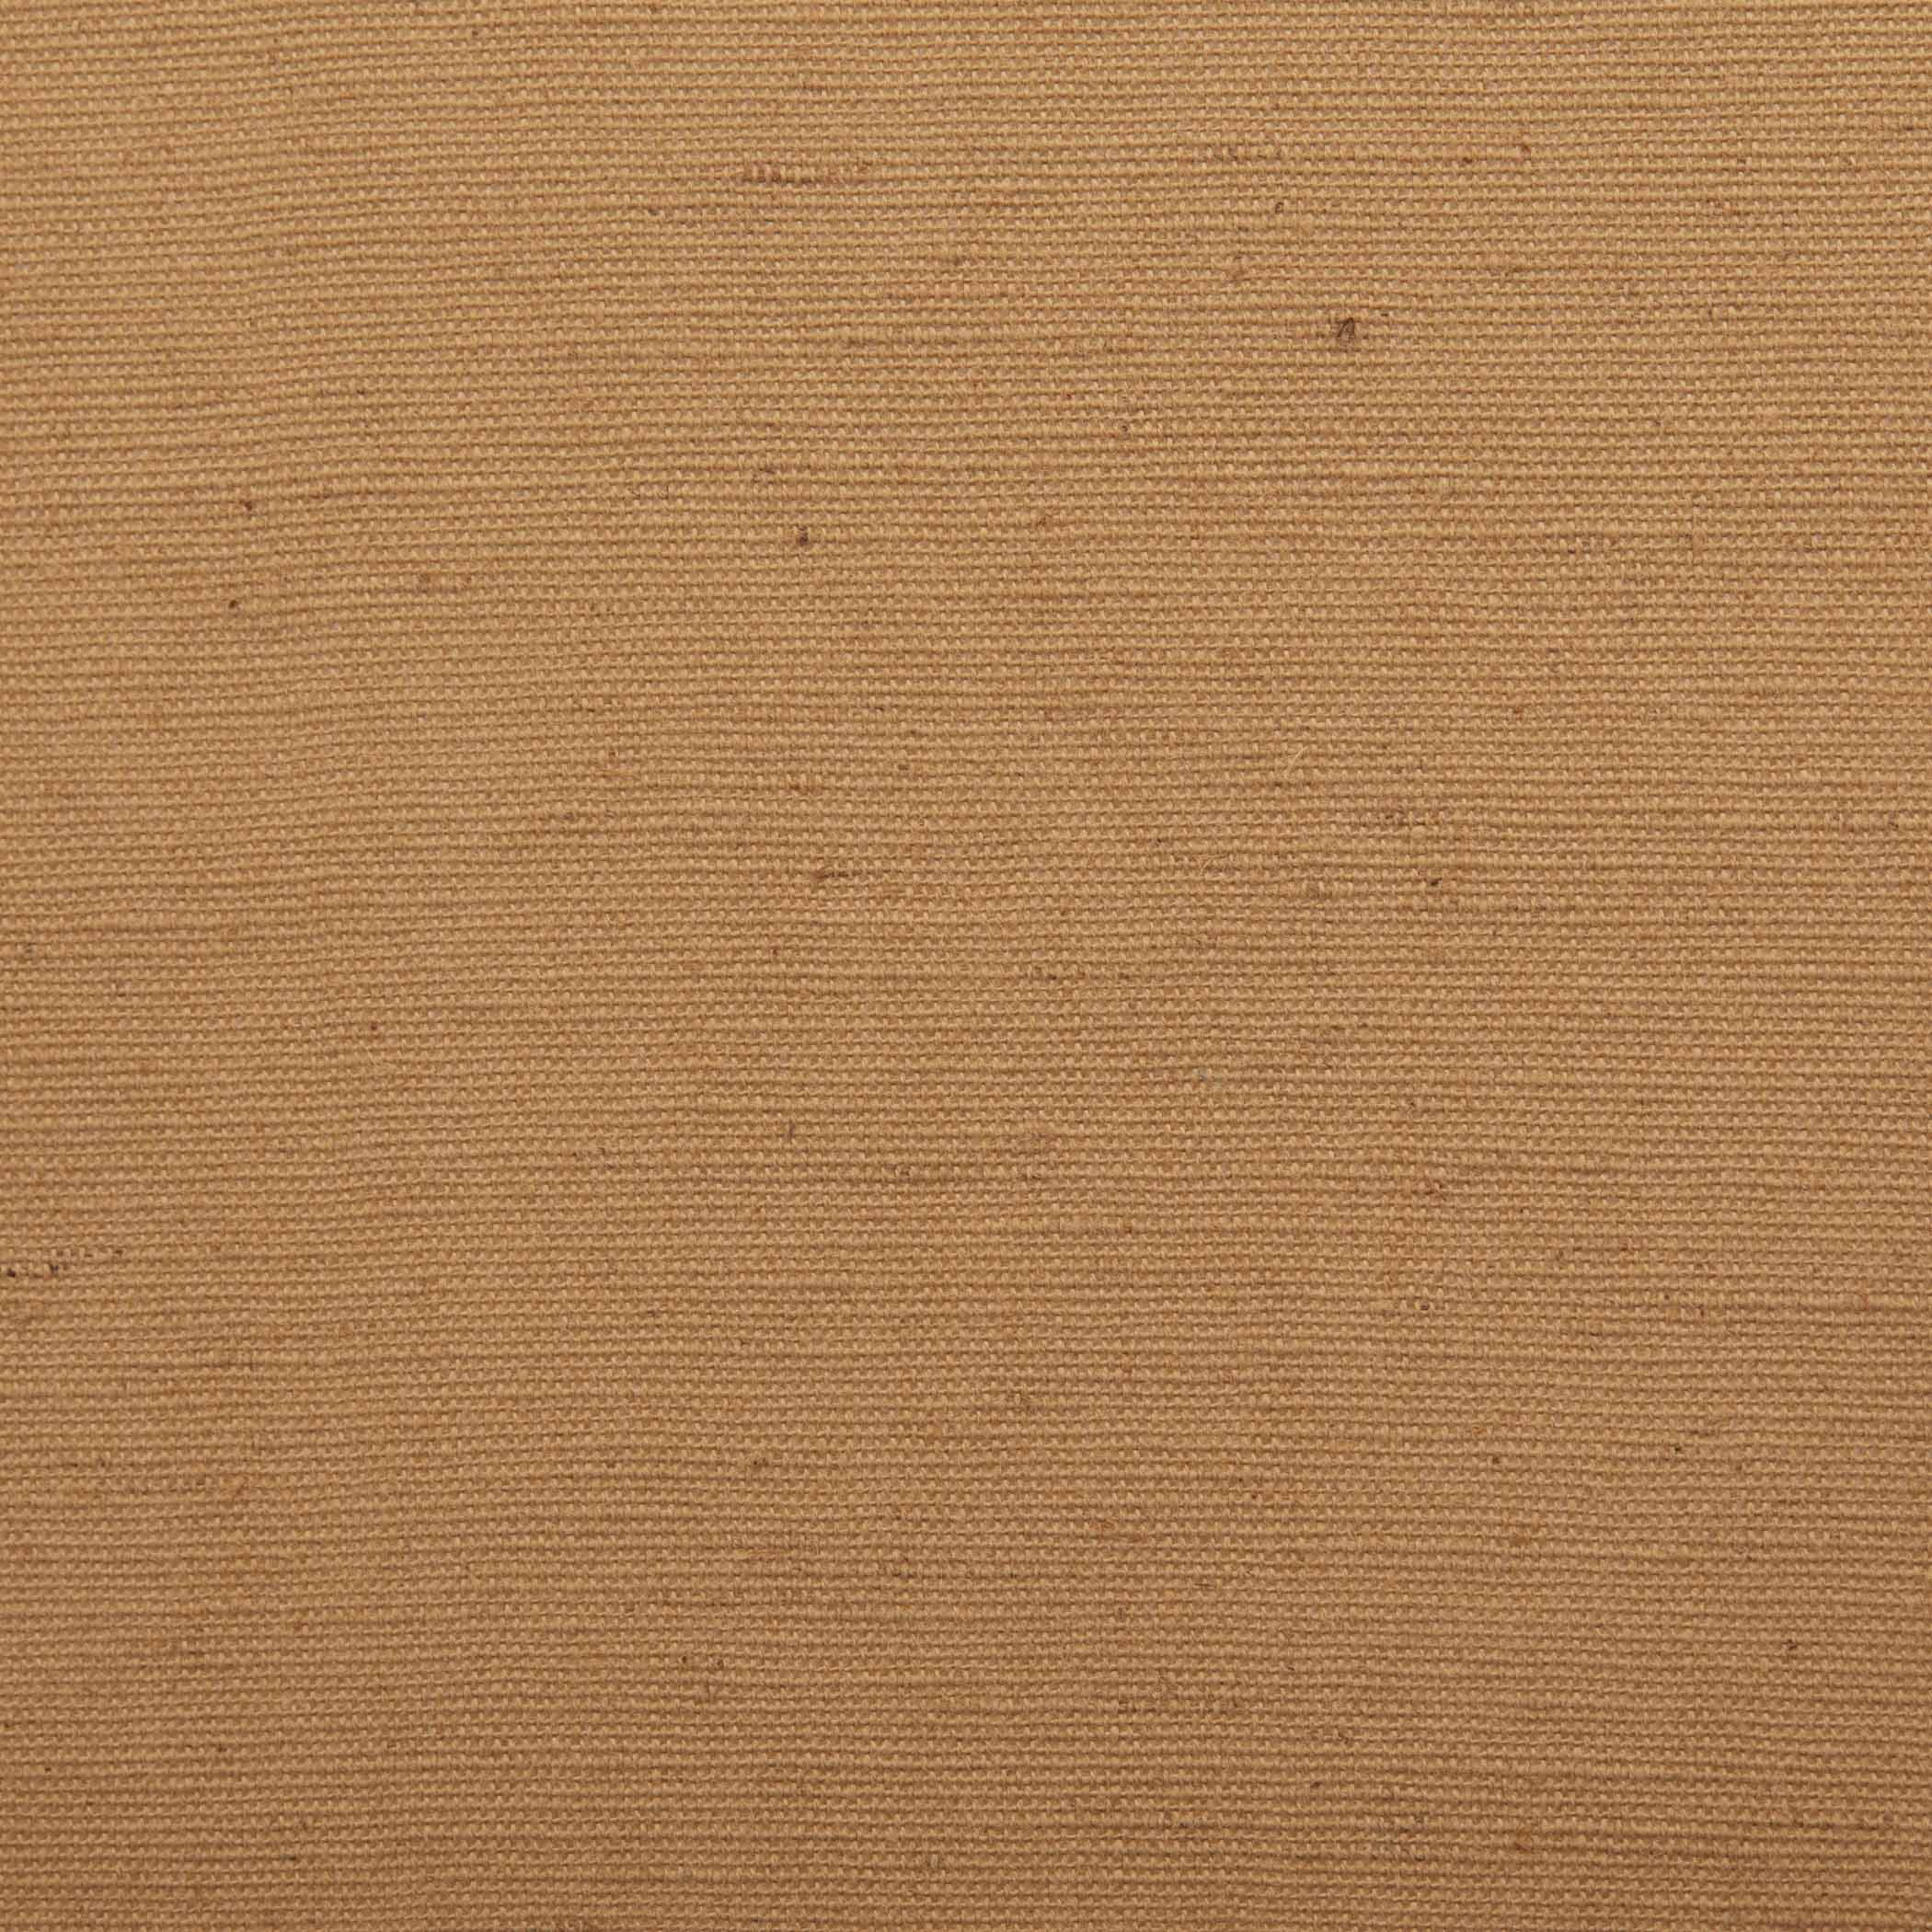 Simple Life Flax Khaki Short Panel Set of 2 63x36